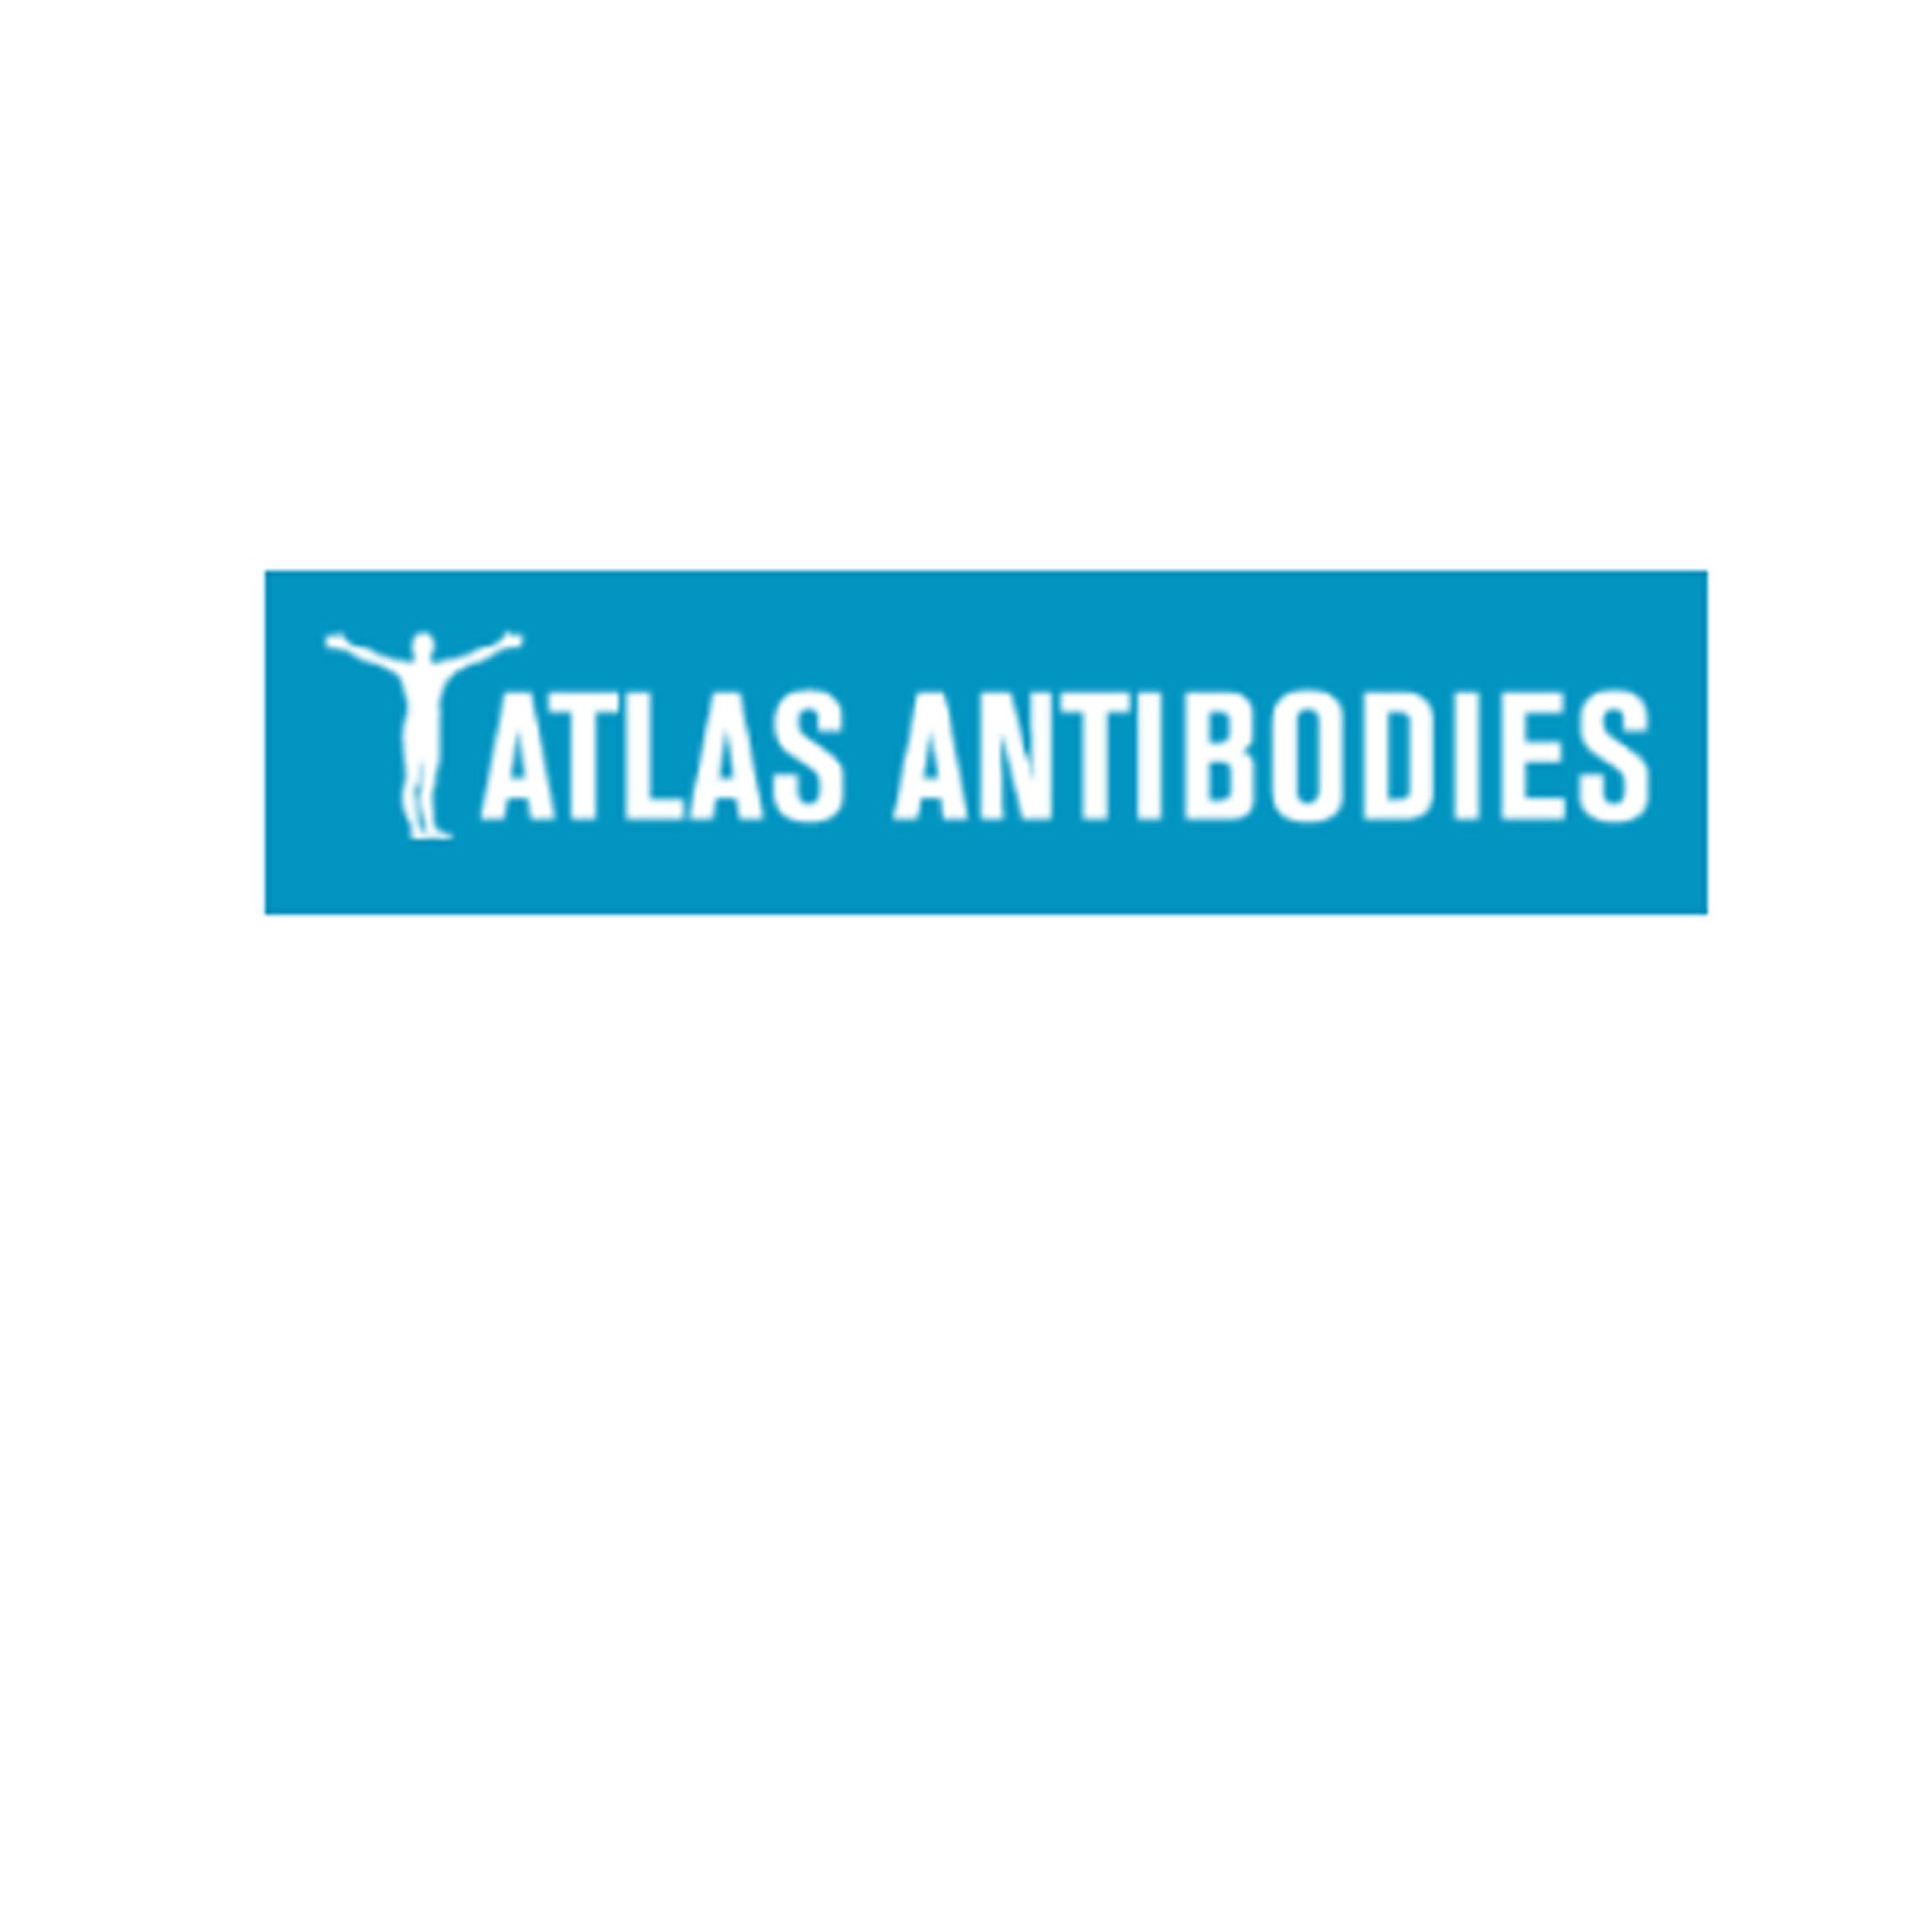 Atlas Antibodies抗体量蛋白质组学,蛋白质编码基因,基因产物，现货